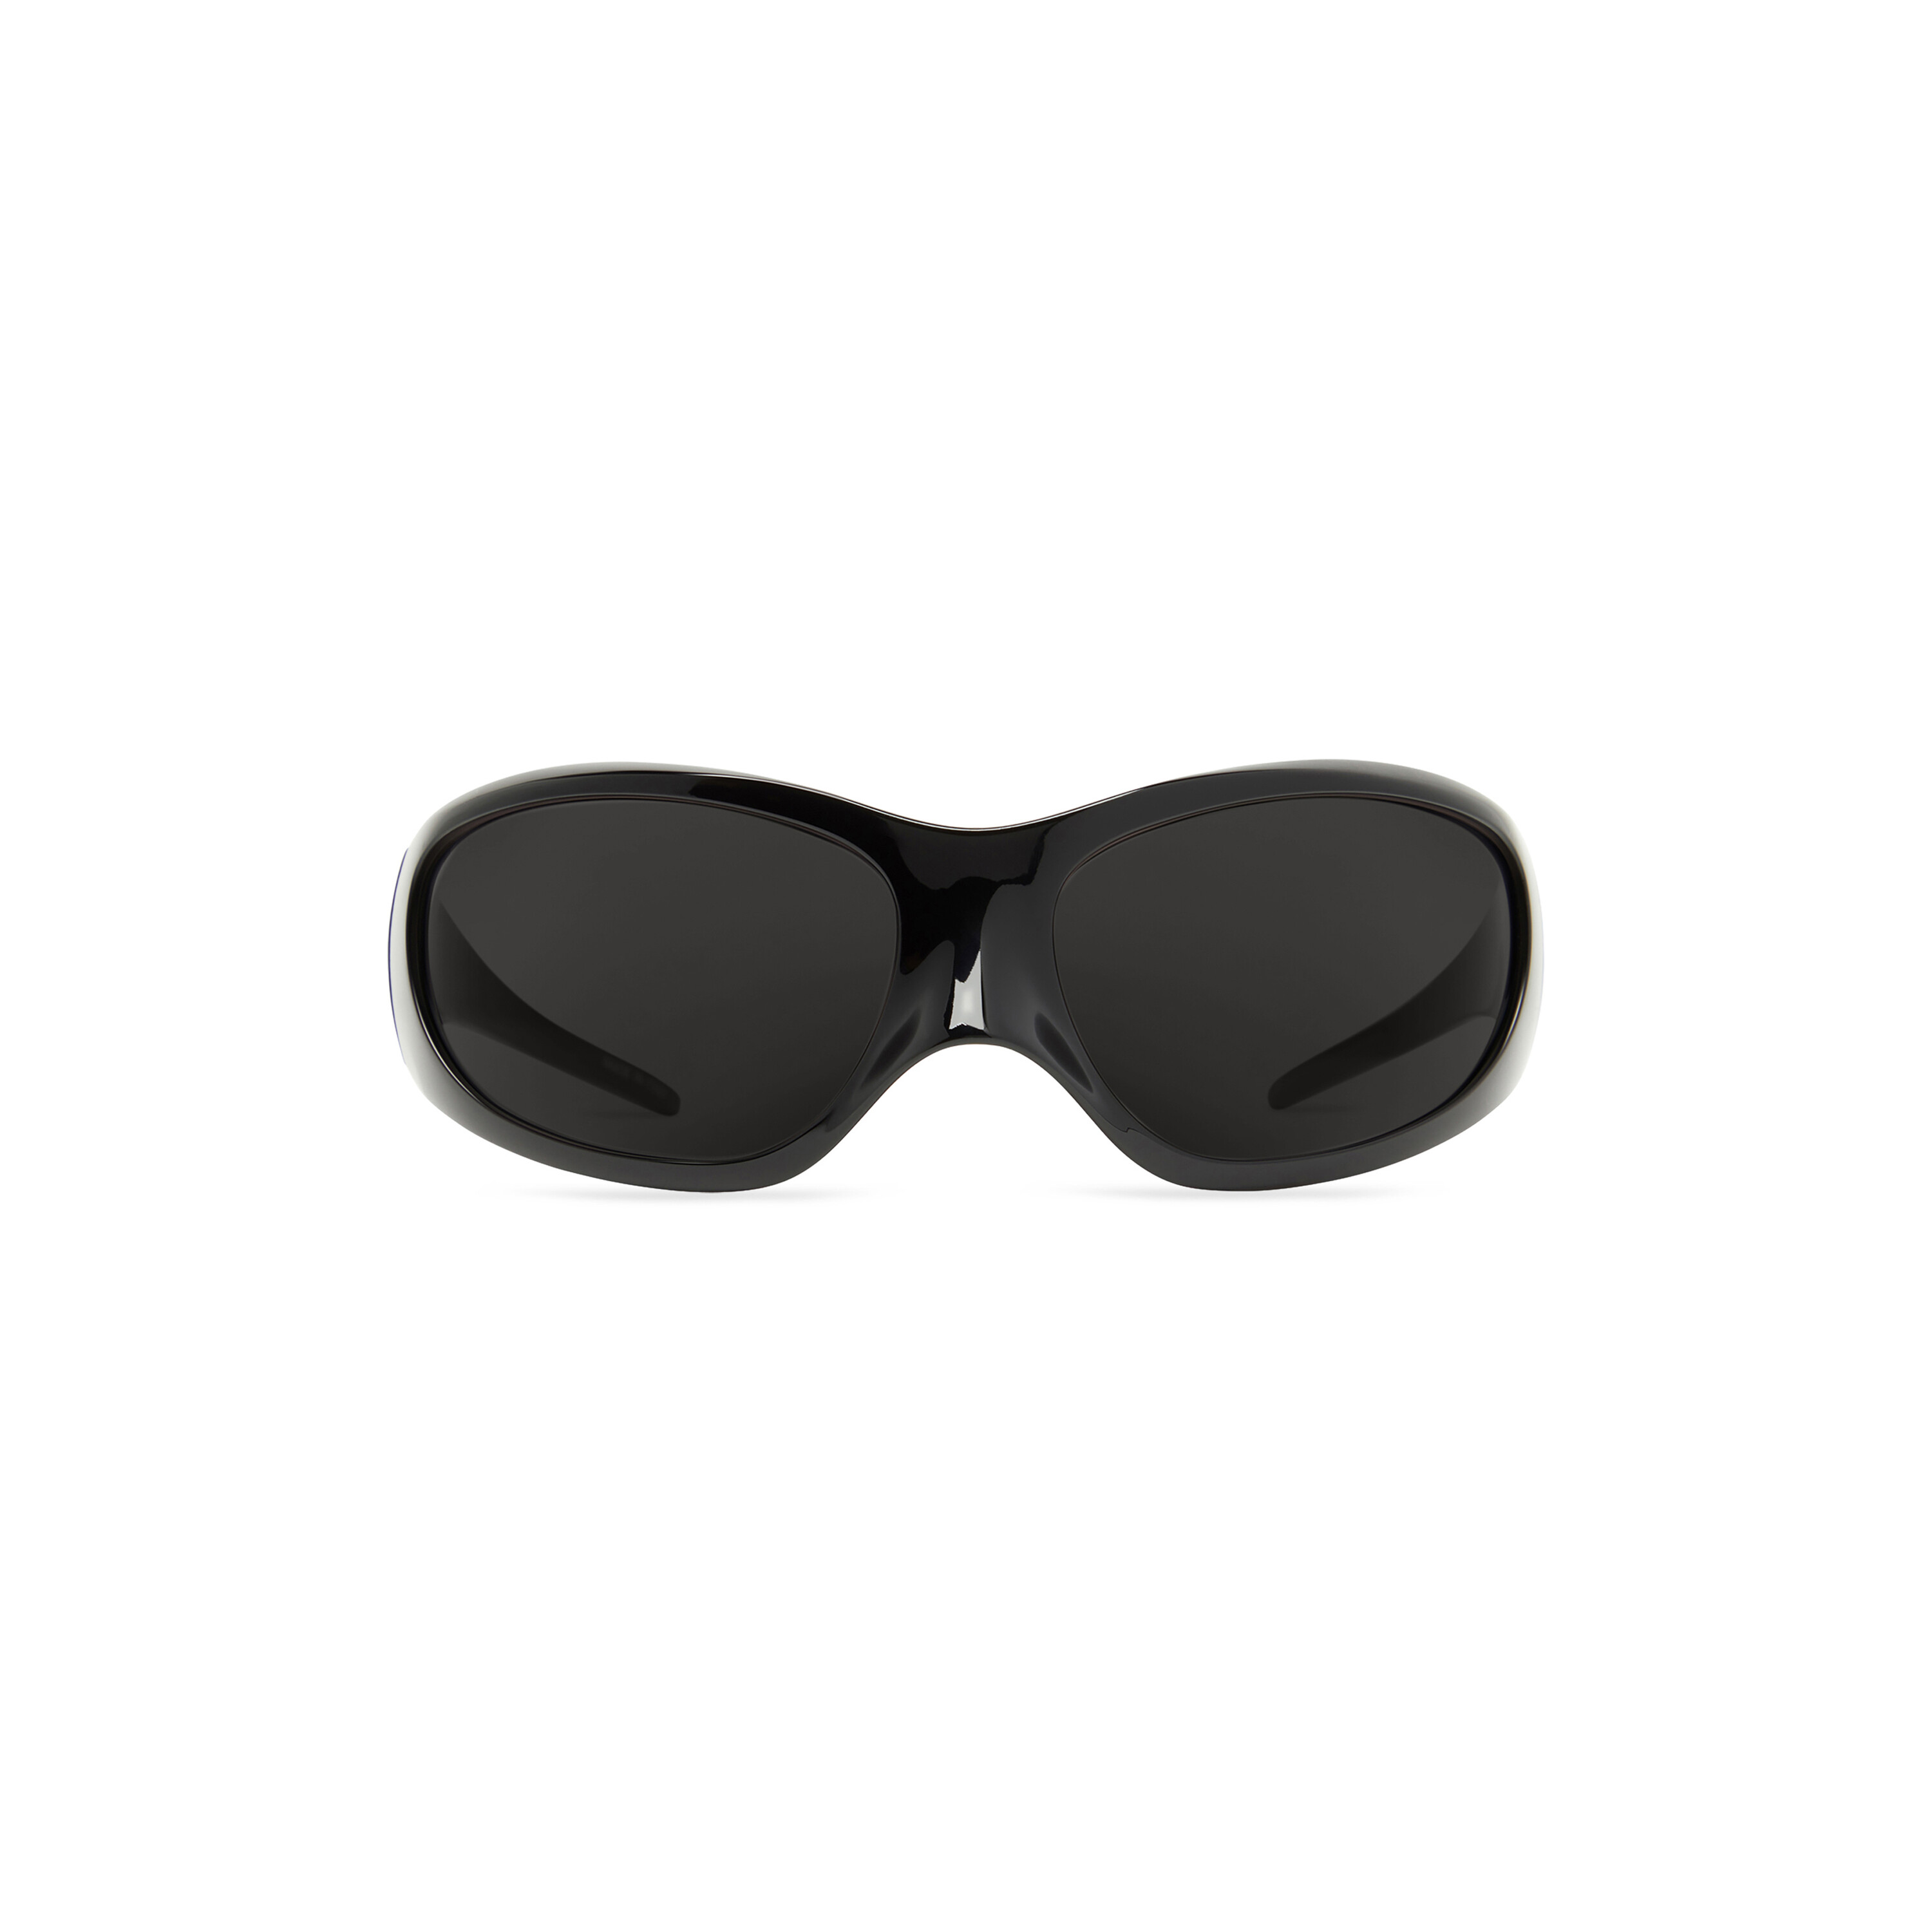 BALENCIAGA Sunglasses BB0069S in 2670l3  graygray gradient  Breuninger